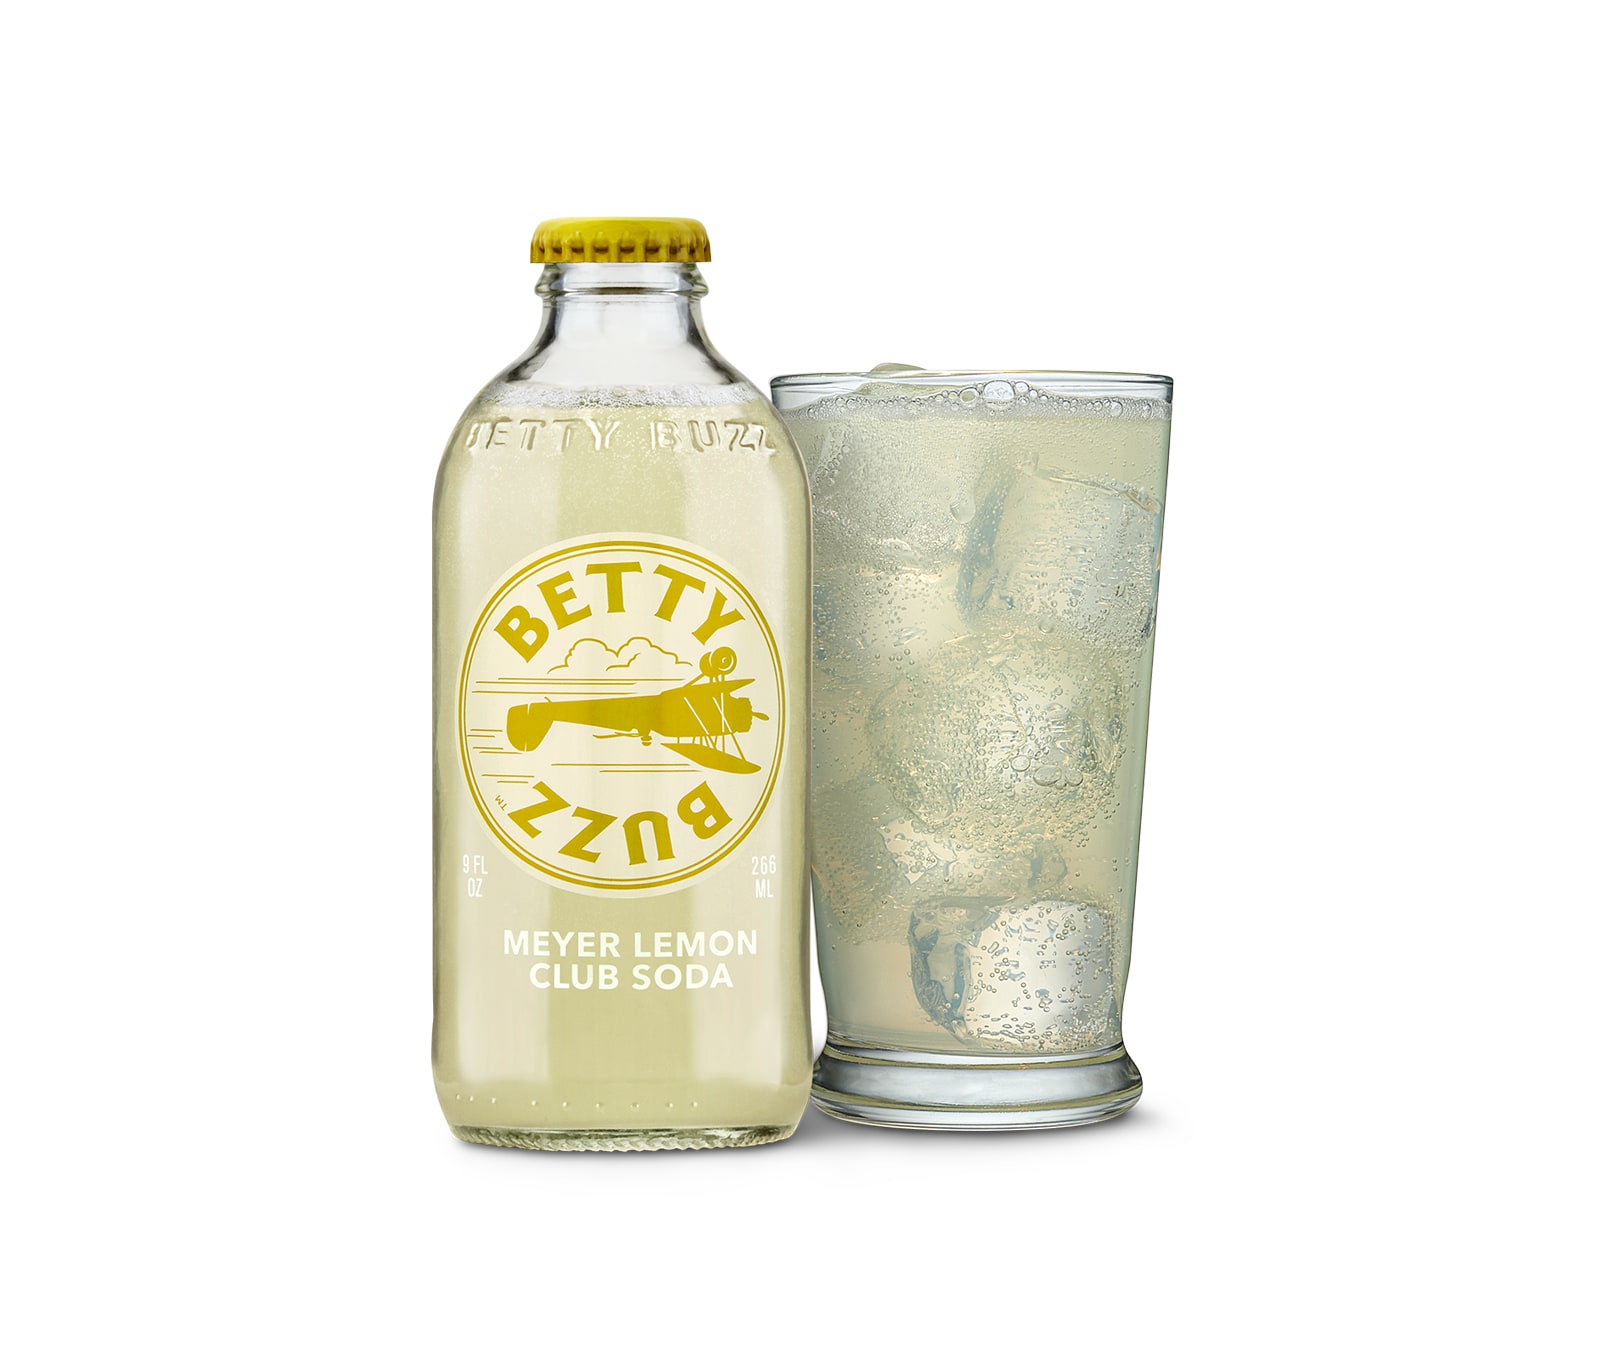 Betty Buzz Meyer lemon bottle package design